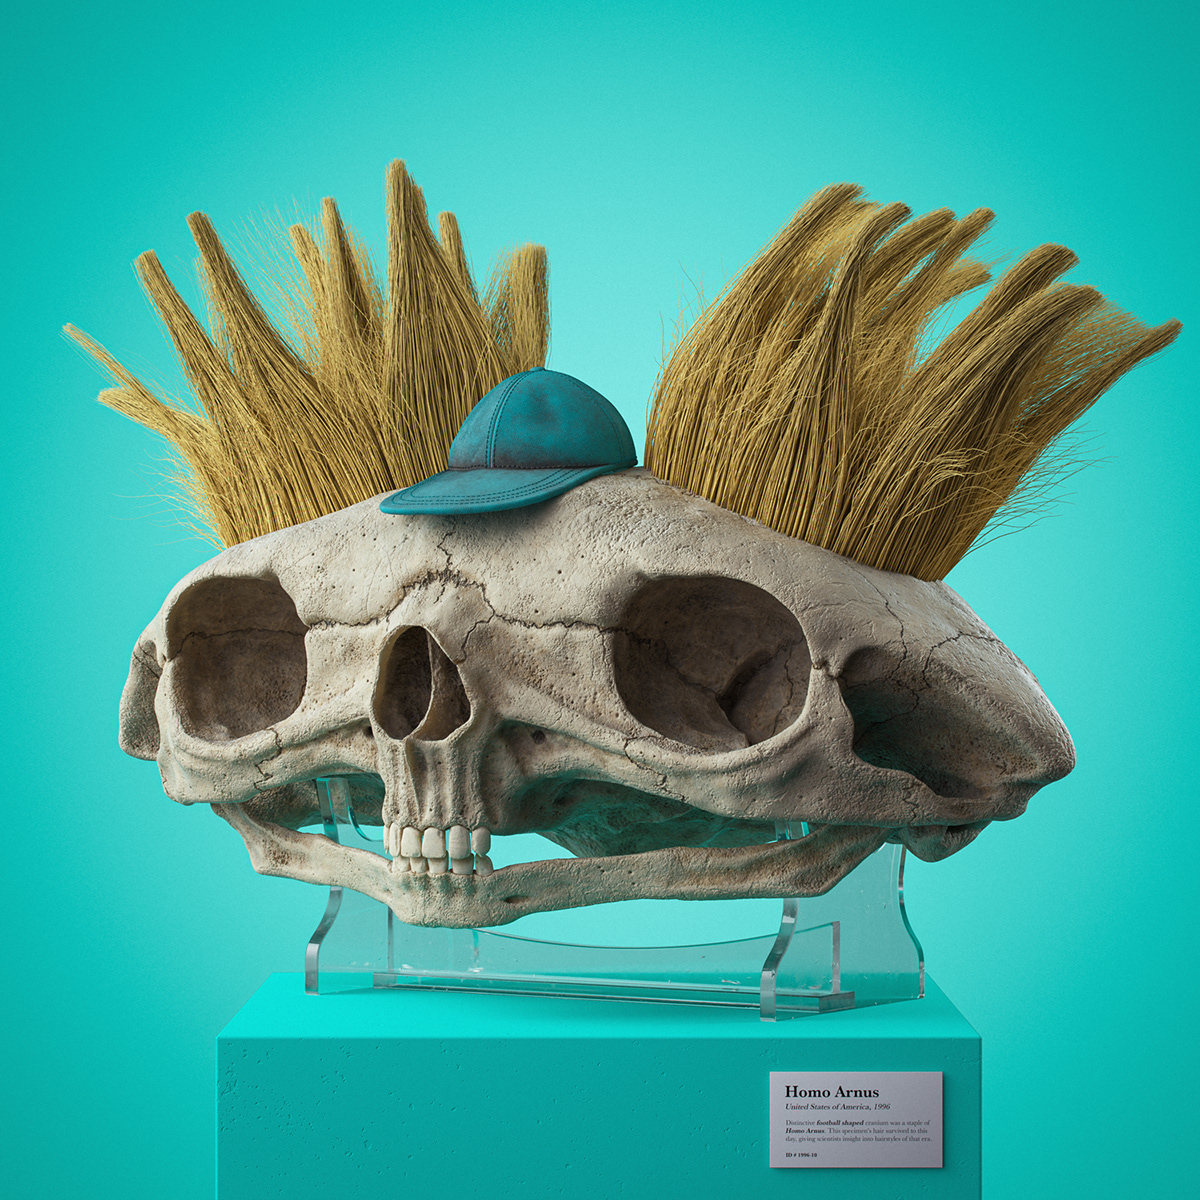 3D anatomy bones cartoon fossils pop culture Render skull